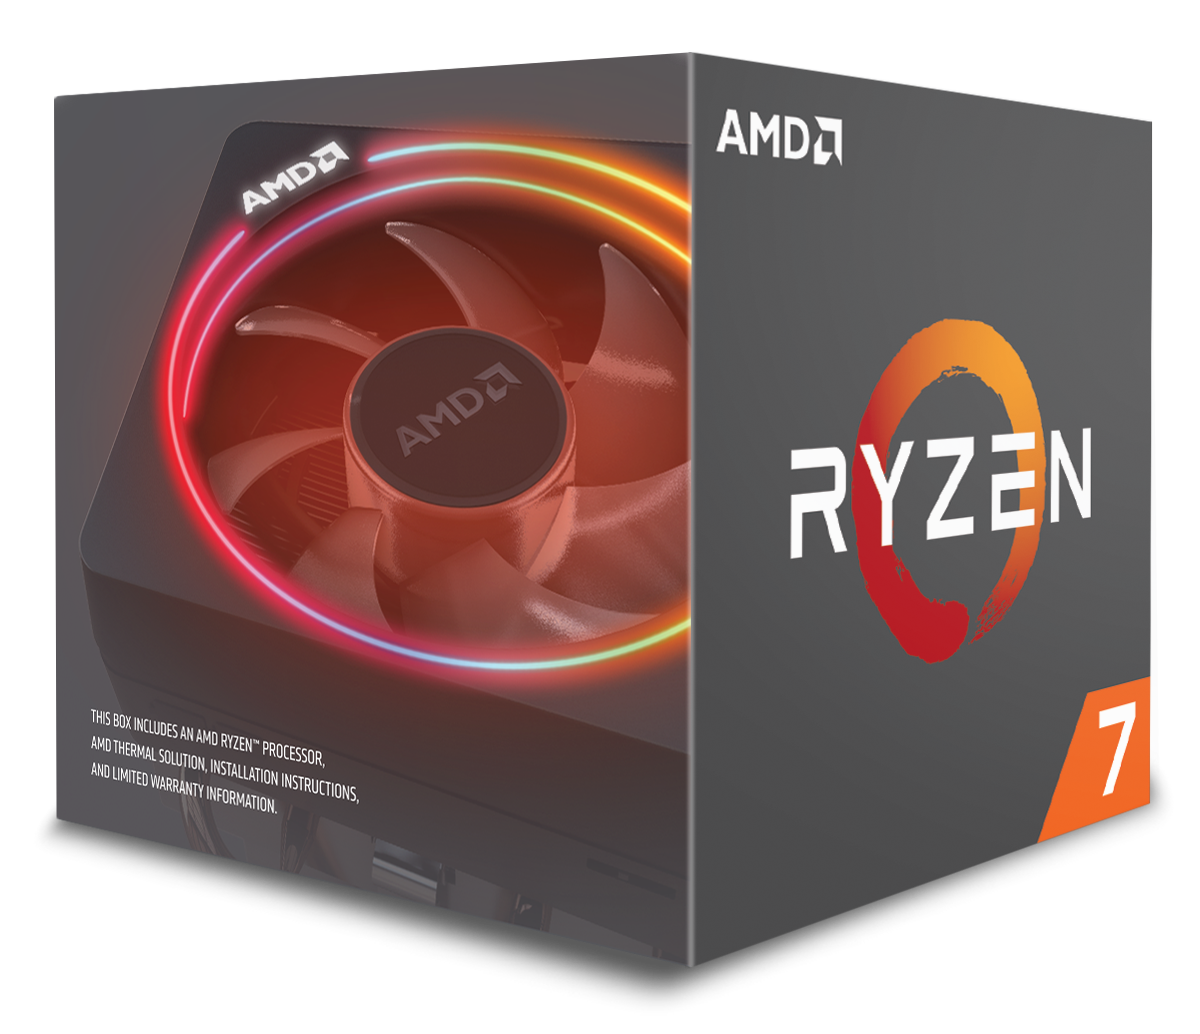 AMD Ryzen 7 2700x Processor